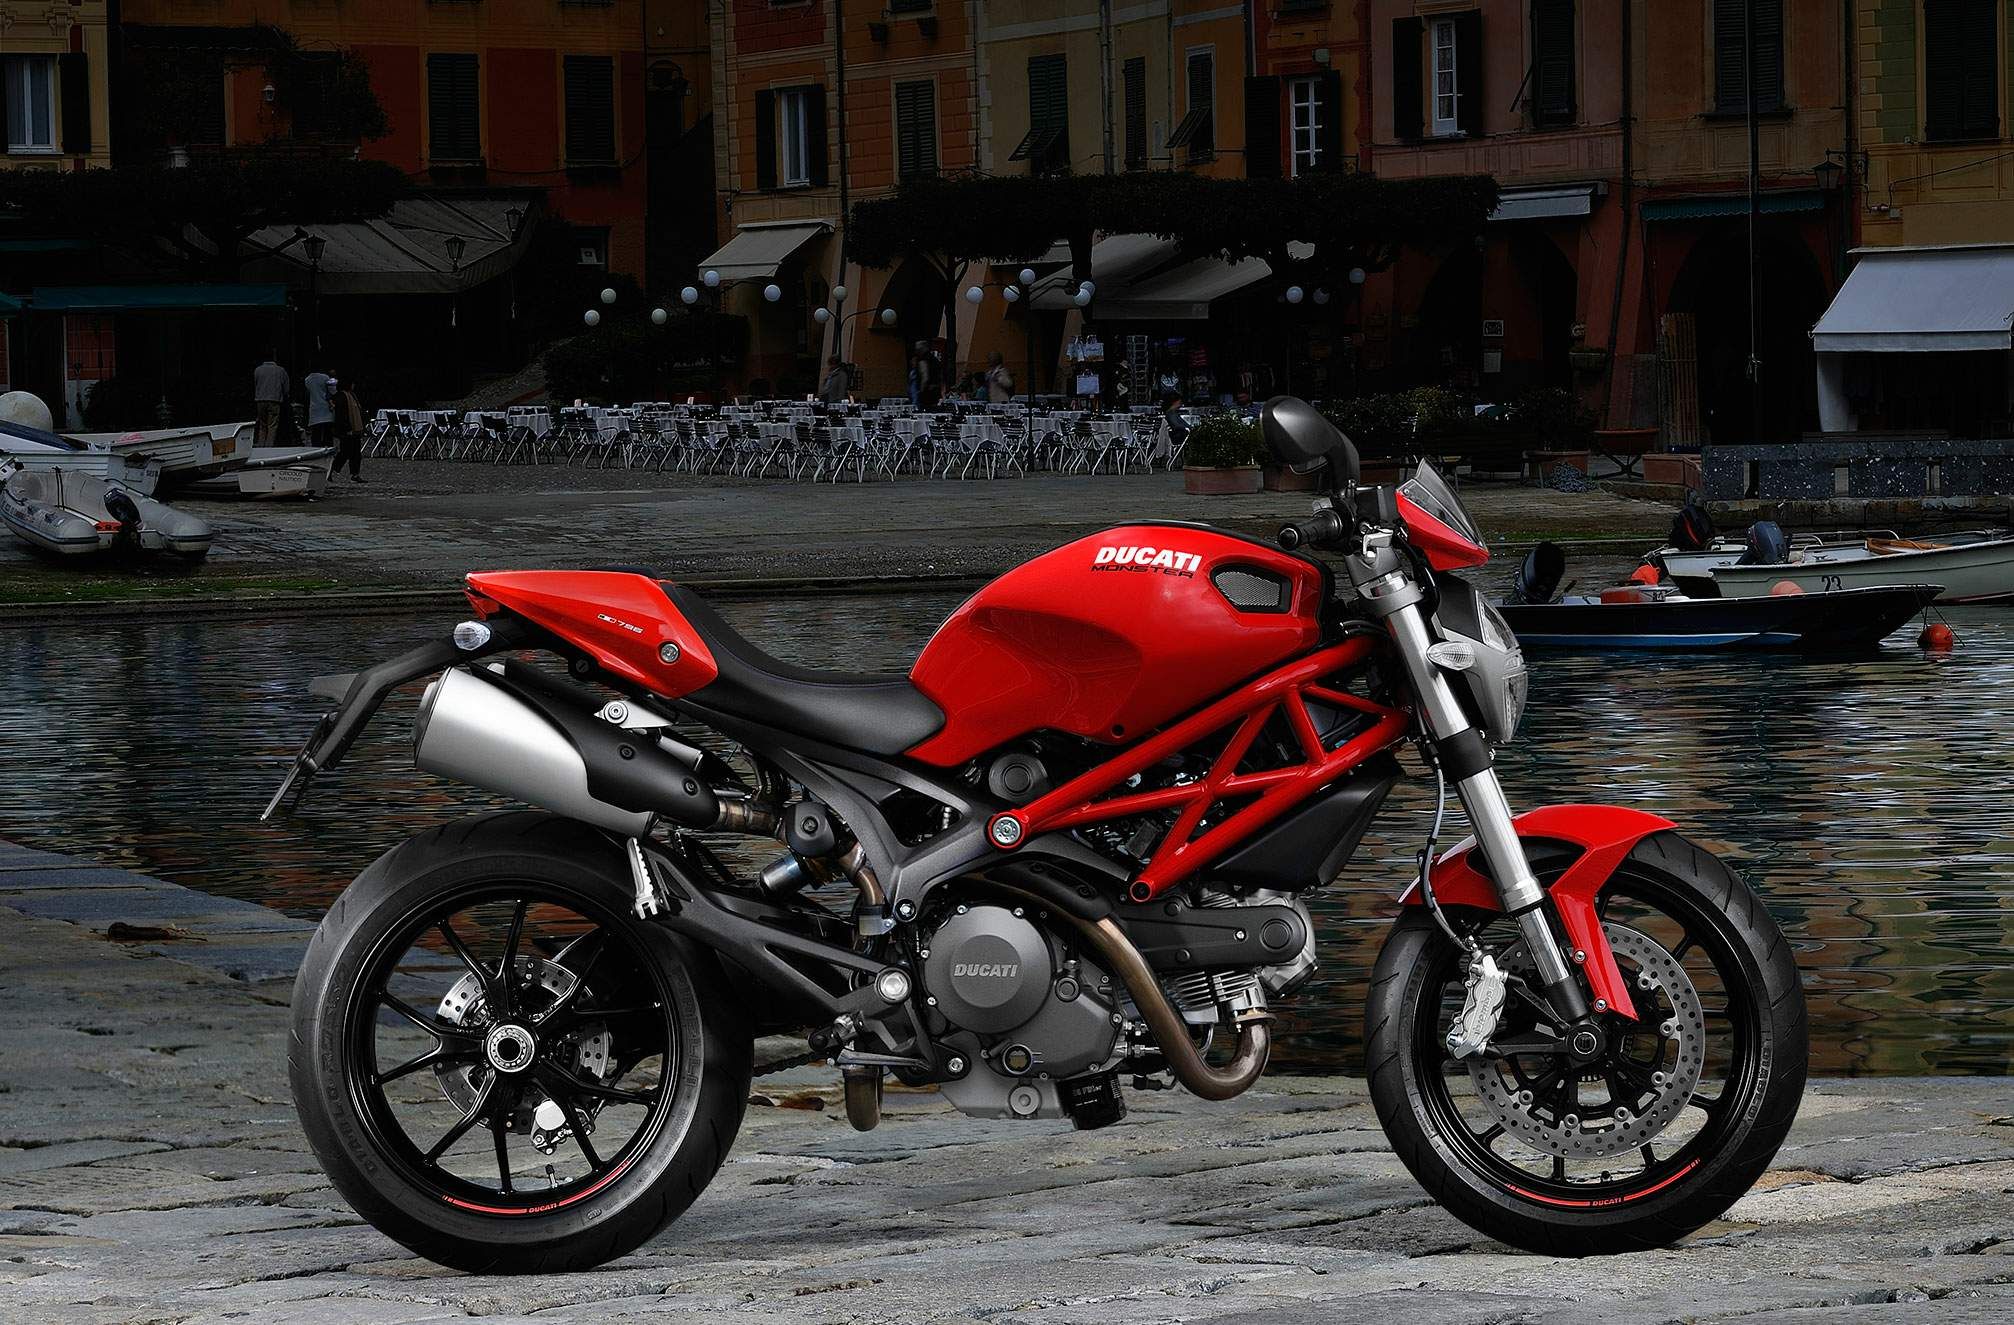 2010 Ducati Monster 796 side view